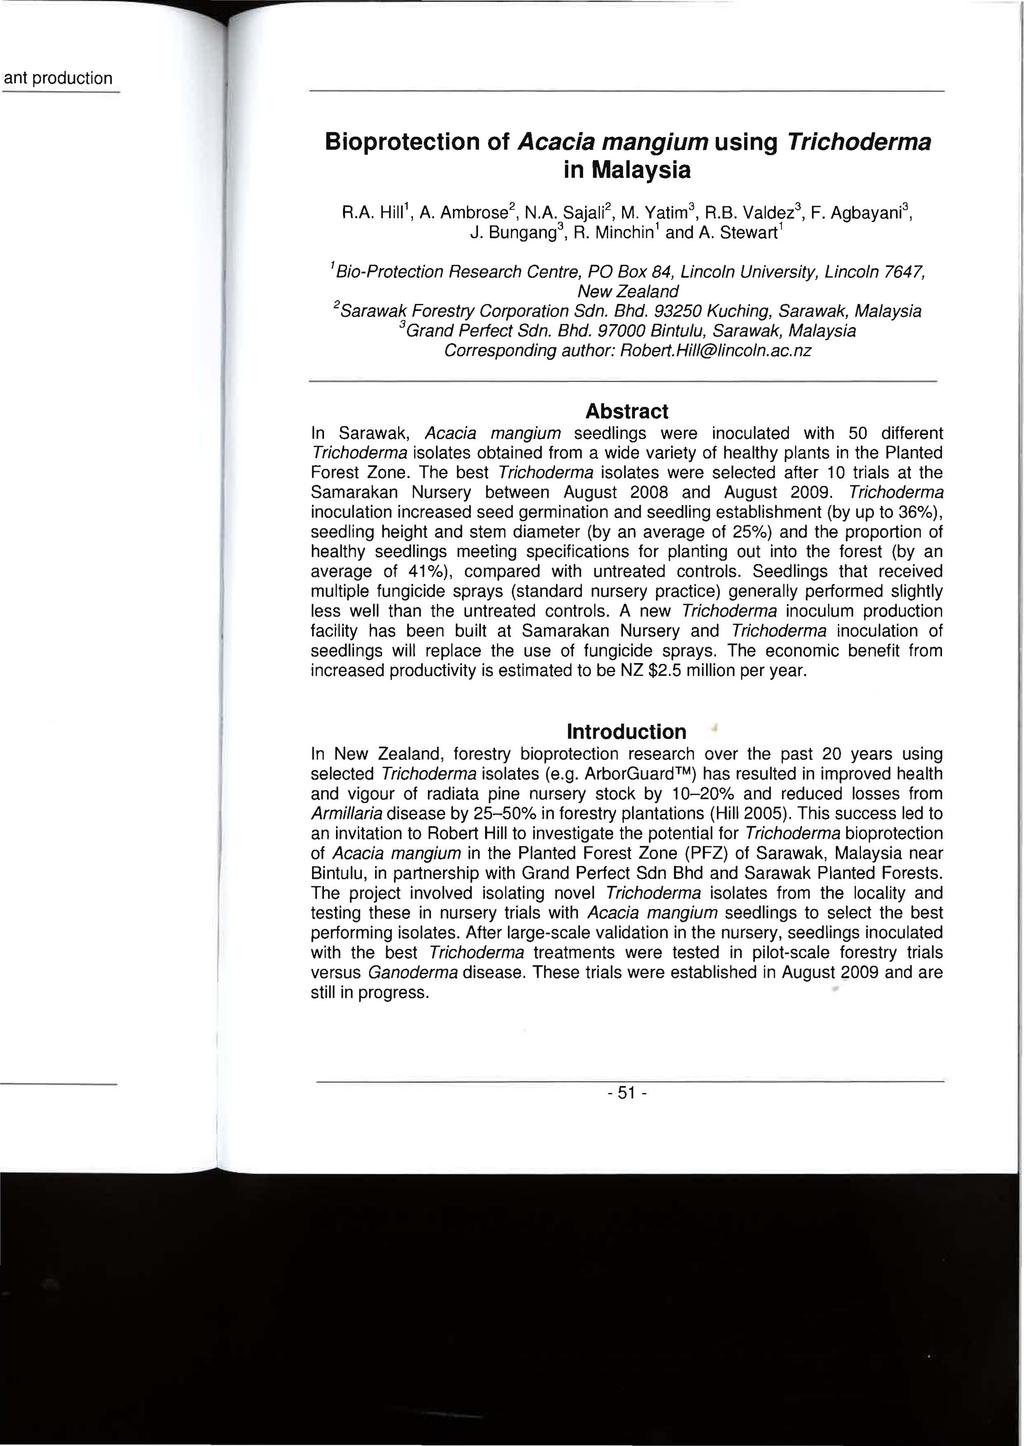 Bioprotection of Acacia mangium using Trichoderma in Malaysia A.A. Hi111, A. Ambrose 2, N.A. Sajali 2, M. Yatim 3, R.B. Valdez 3, F. Agbayani 3, J. Bungang 3, R. Minchin1 and A.